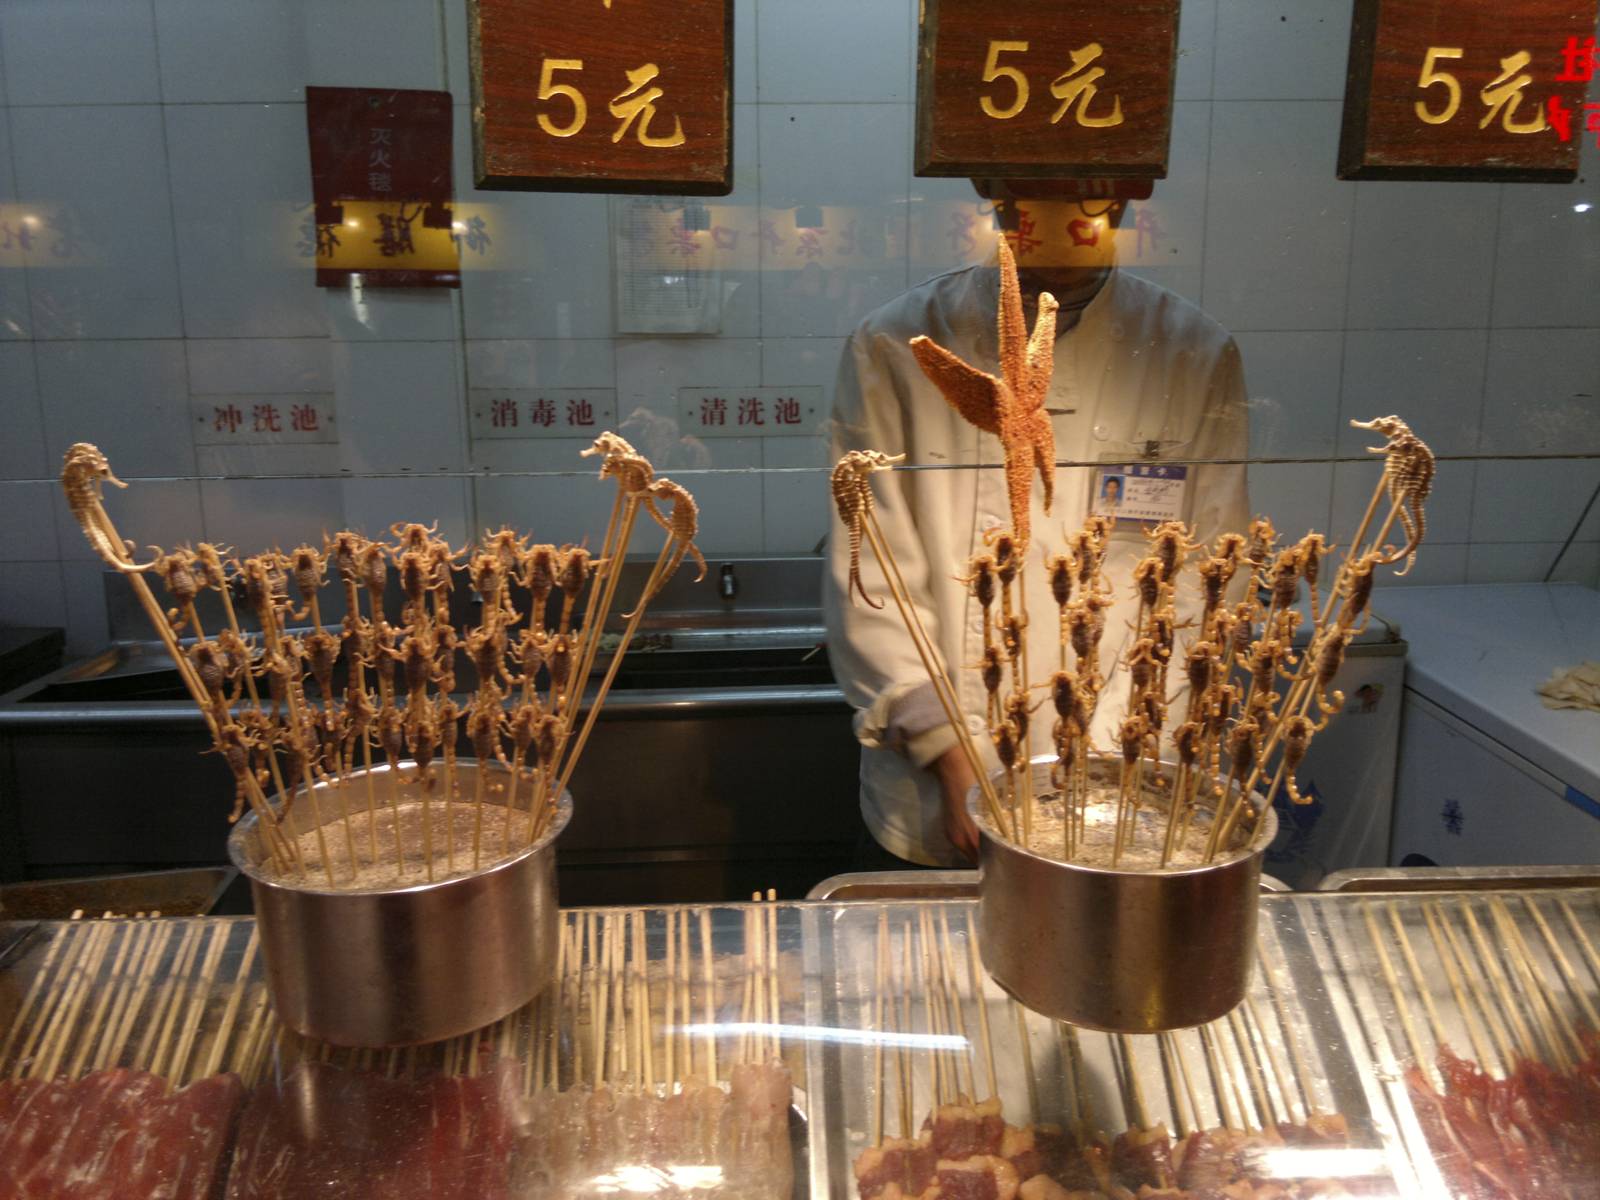 Cina-china-scorpions-spiedini-street-food